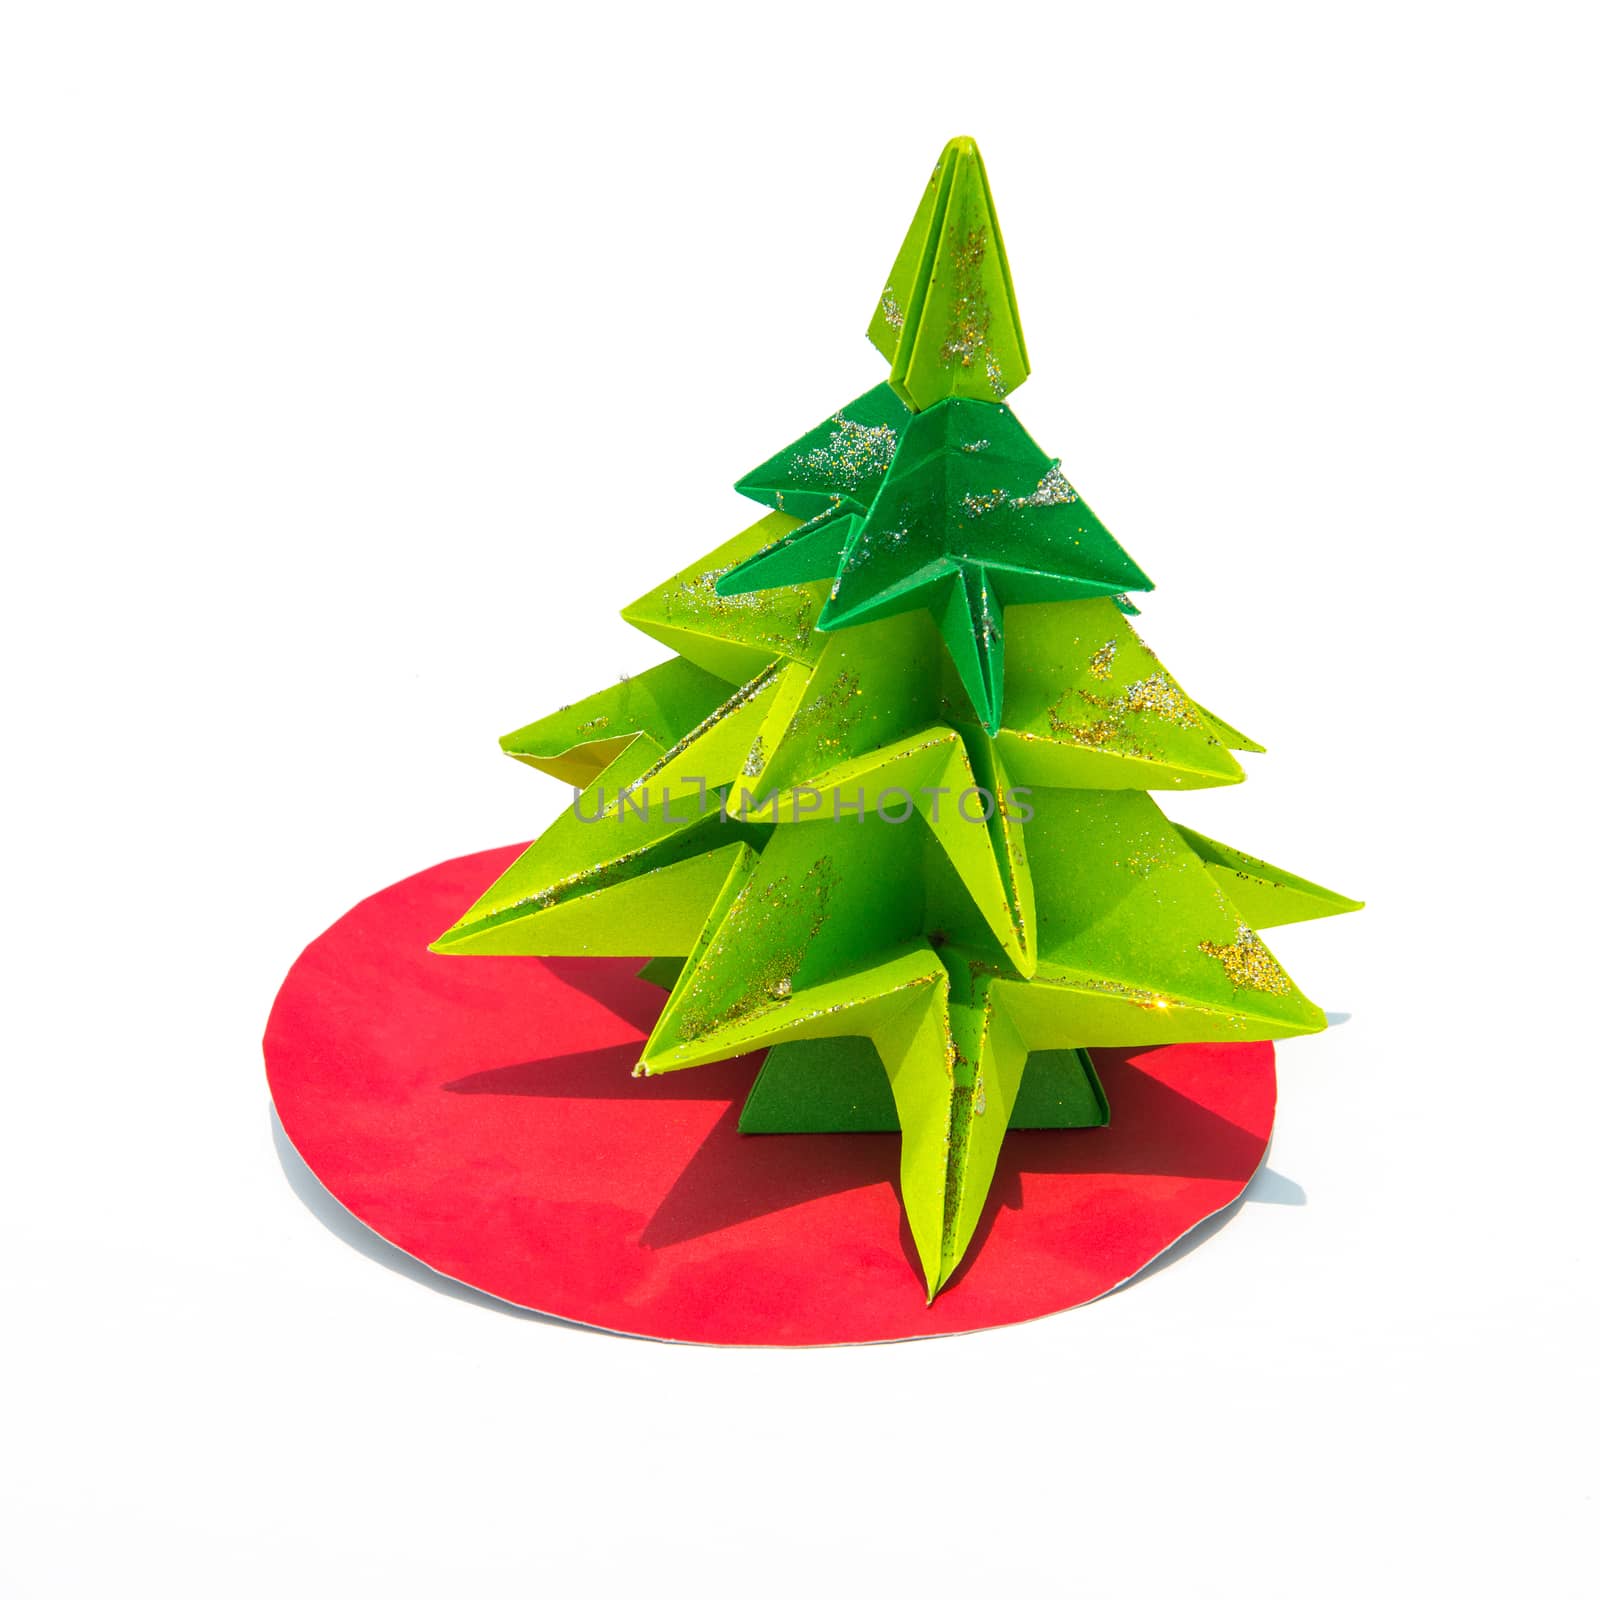 Green origami christmas tree by opasstudio